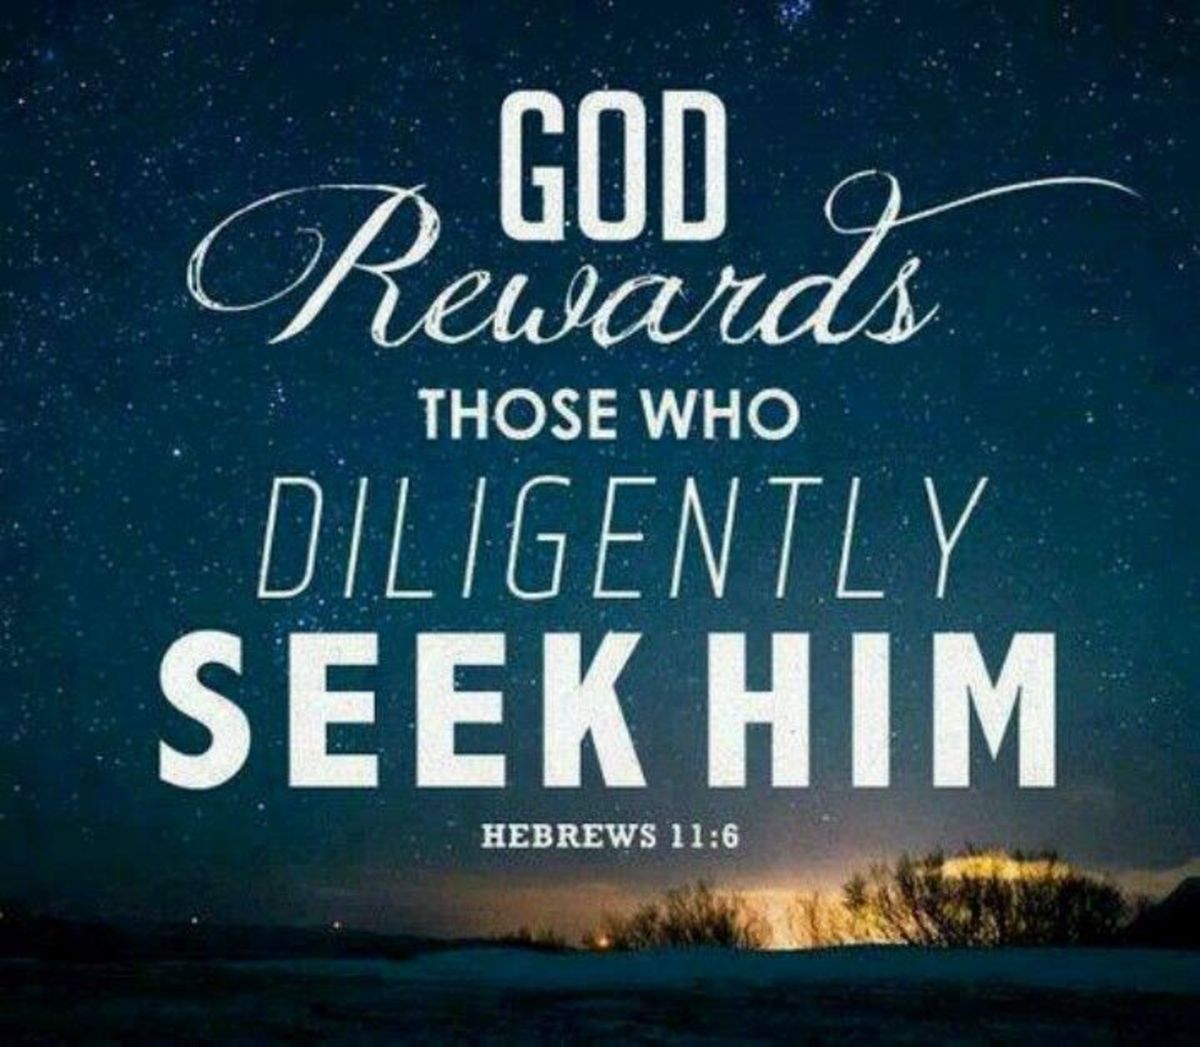 The Life God Rewards: Diligently Seeking Him